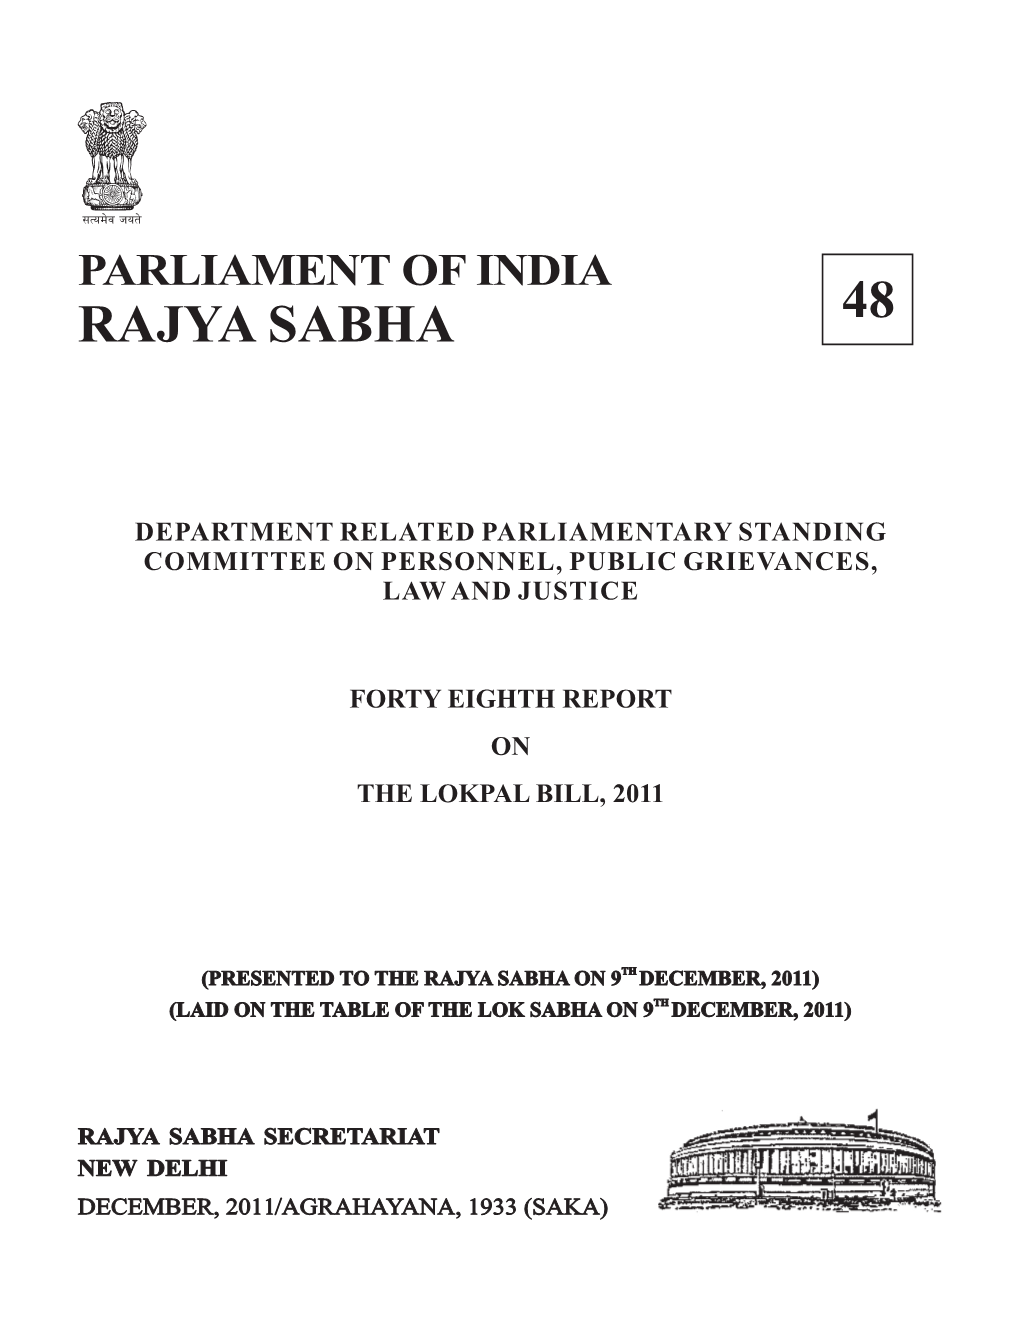 Parliament of India Rajya Sabha 48